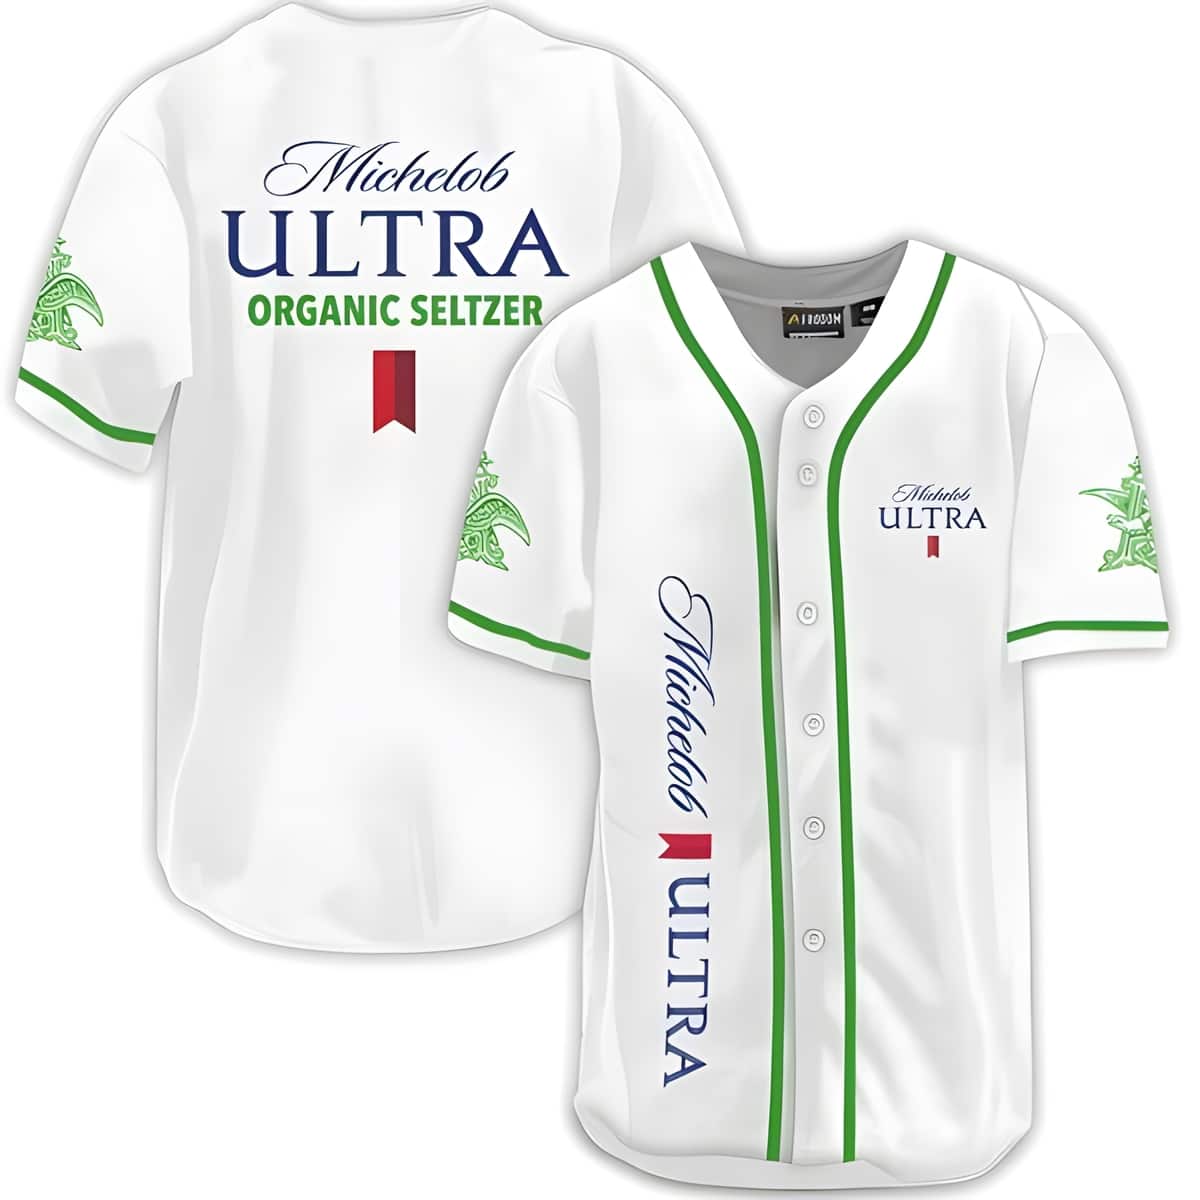 White Michelob ULTRA Baseball Jersey Organic Seltzer Gift For Fans